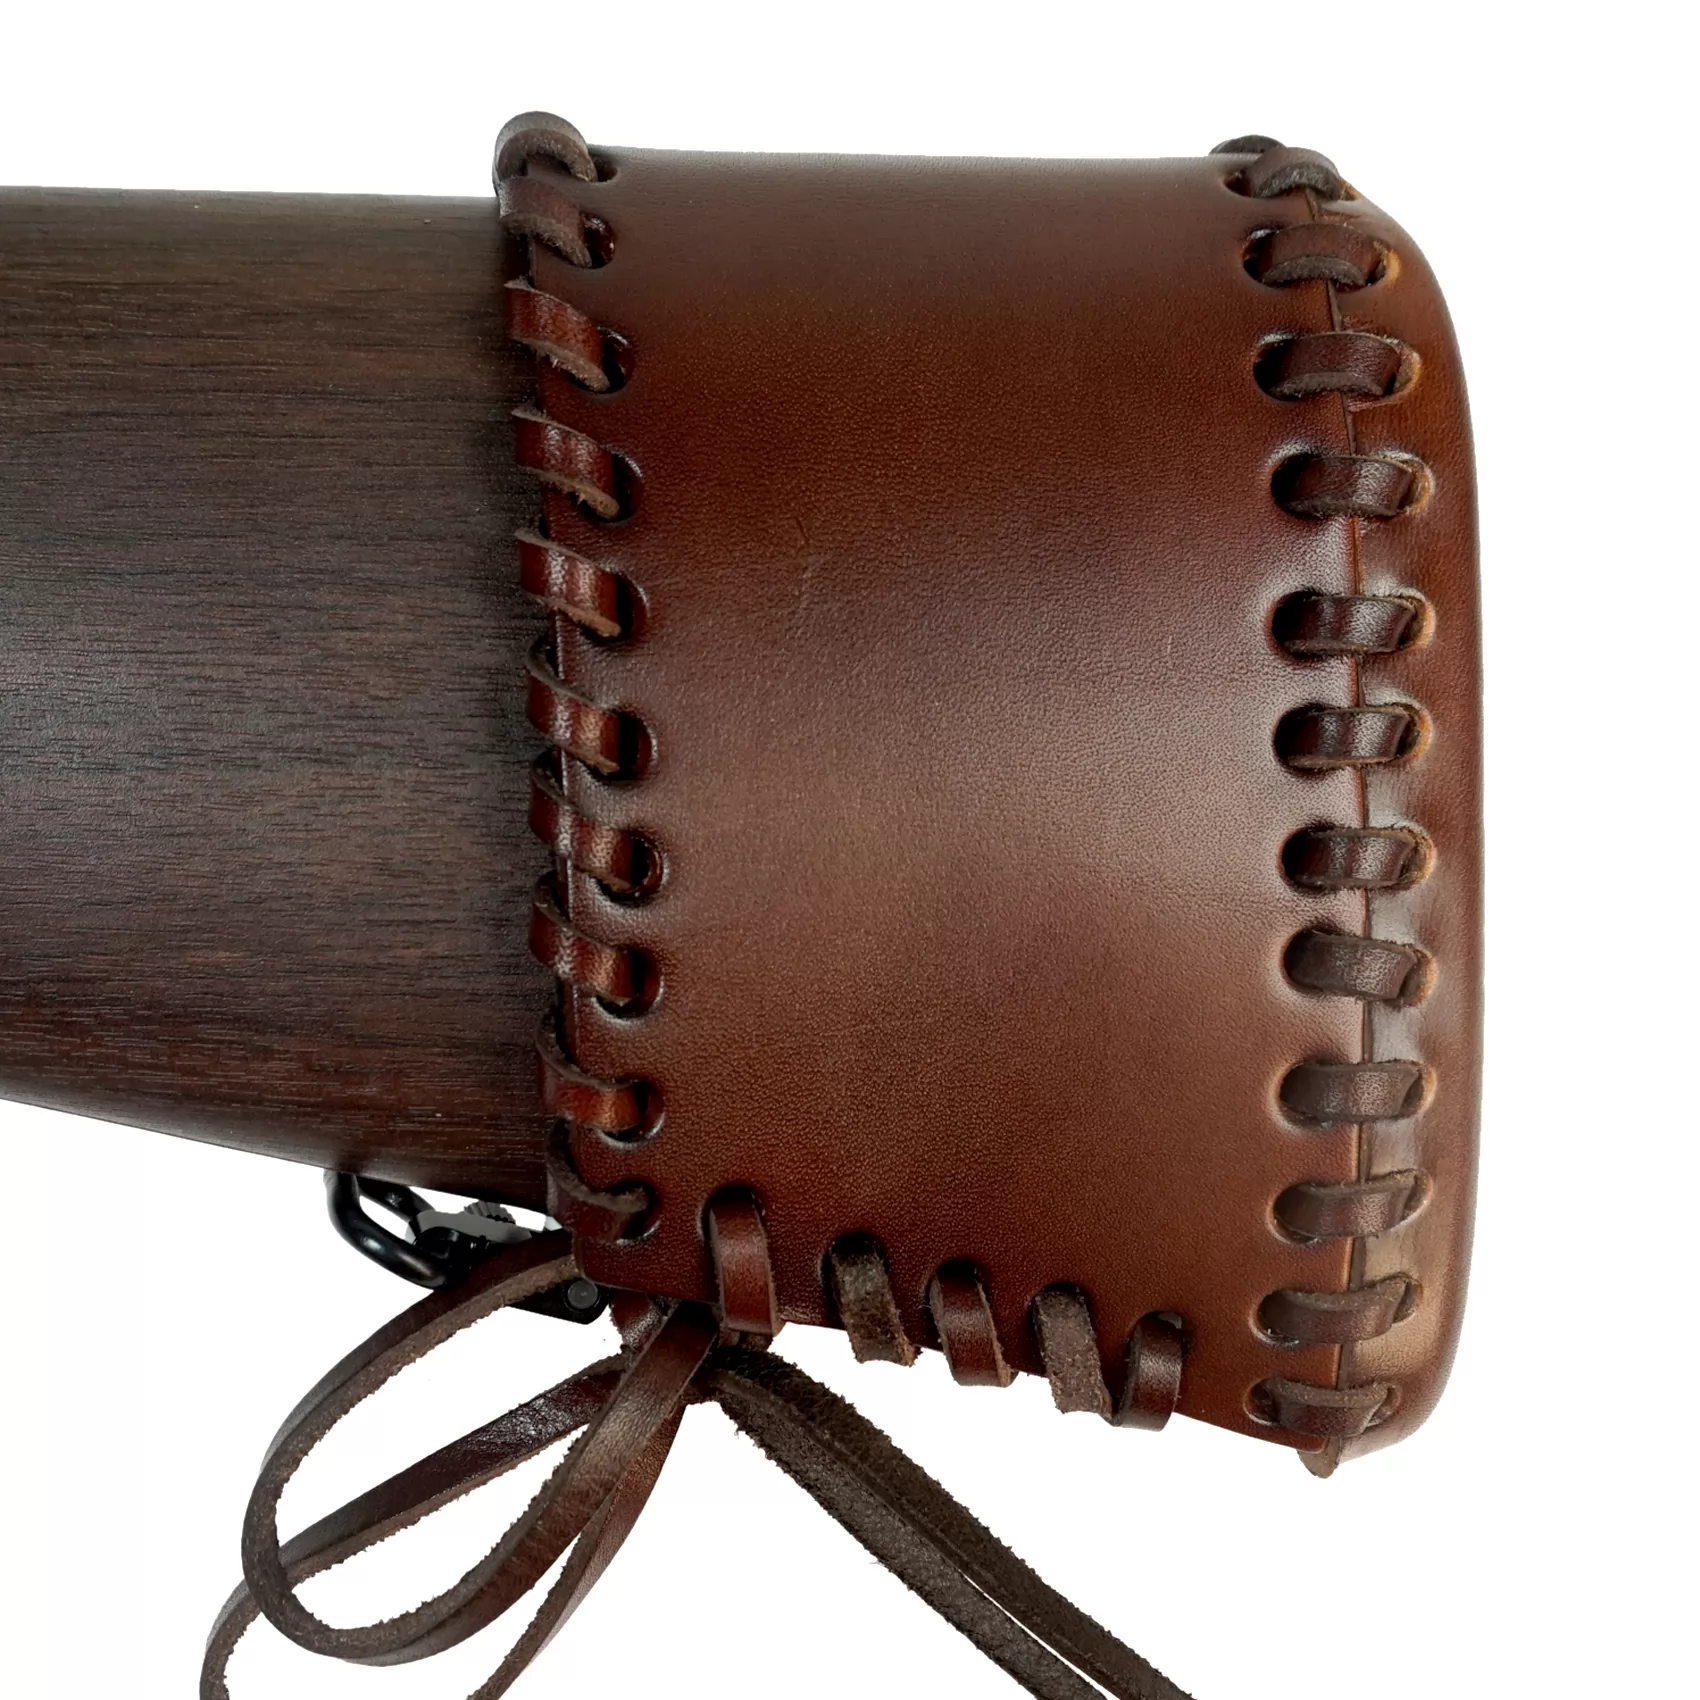 OP ORIGINAL POWER Leather Buttstock Recoil Pad,Handmade